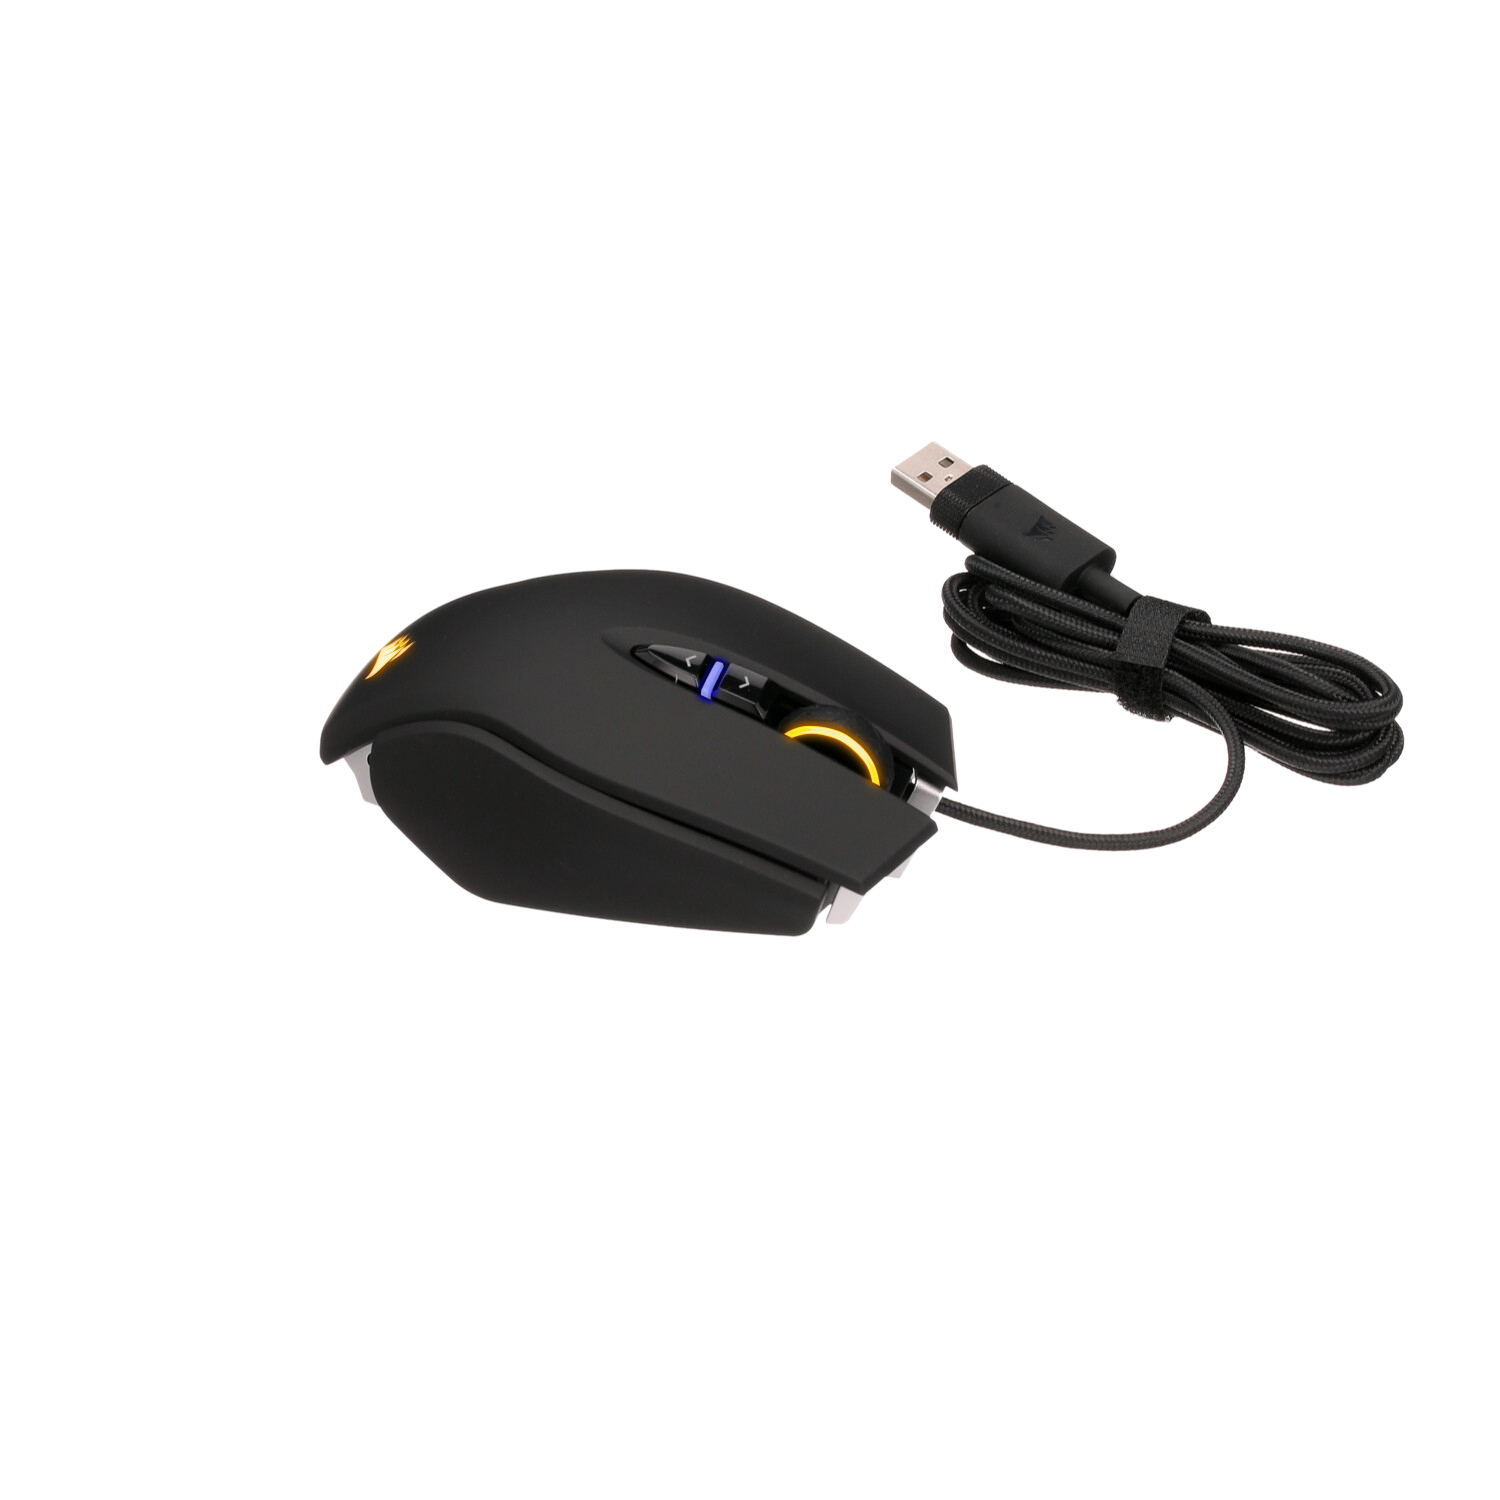 Corsair M65 RGB Elite Tunable PC Gaming Mouse